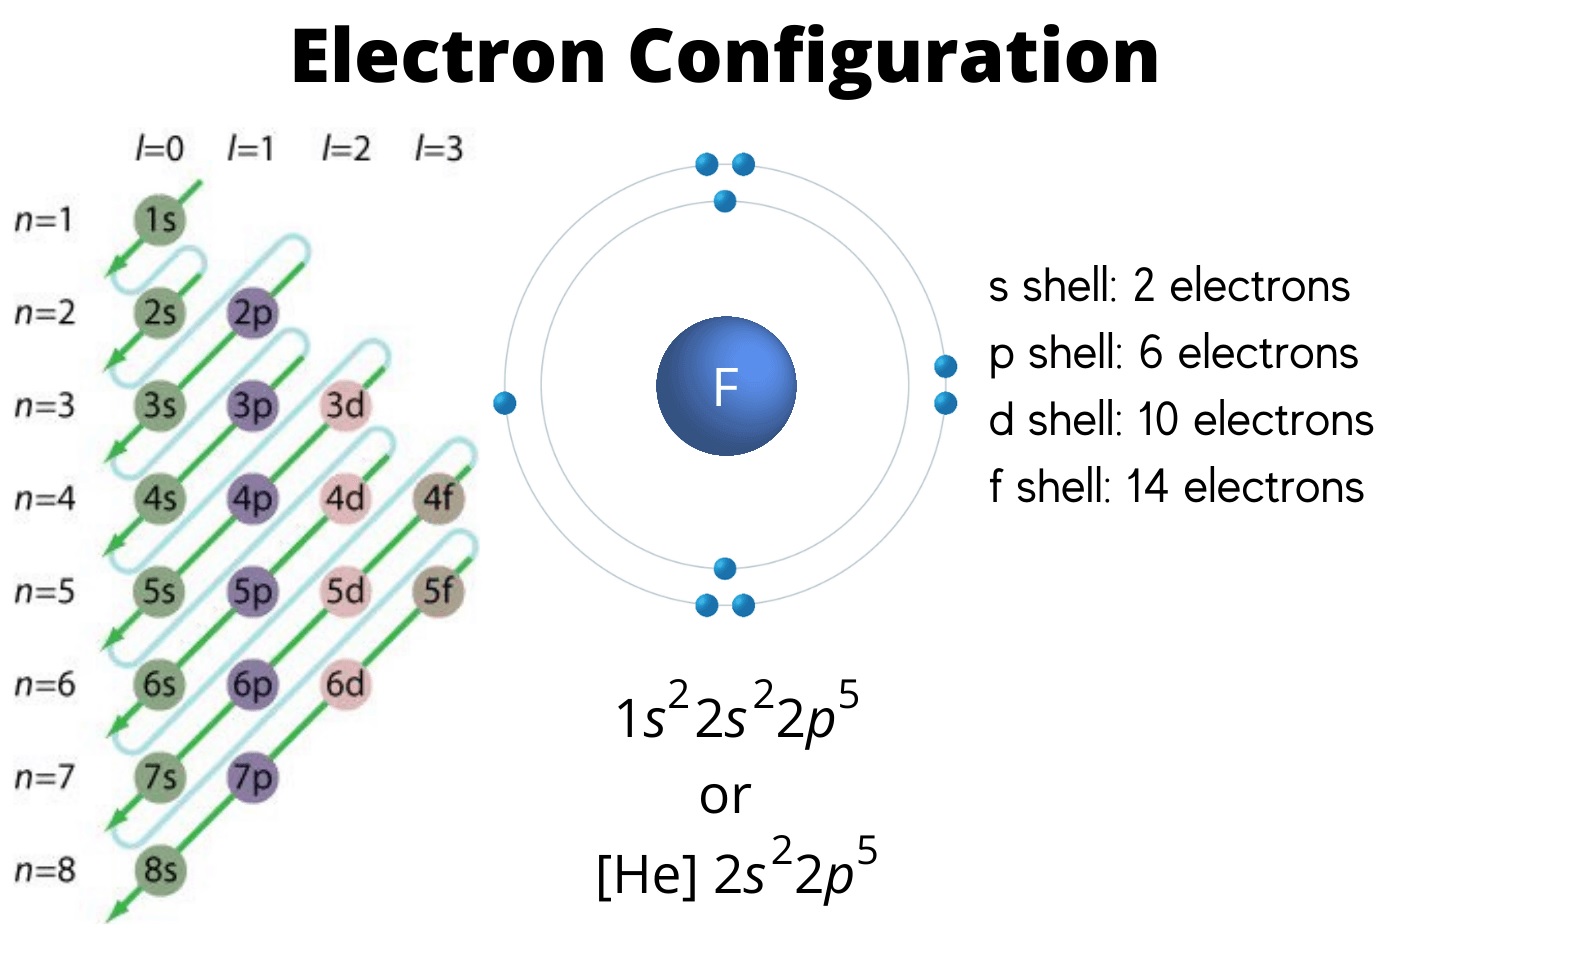       Electron configuration.